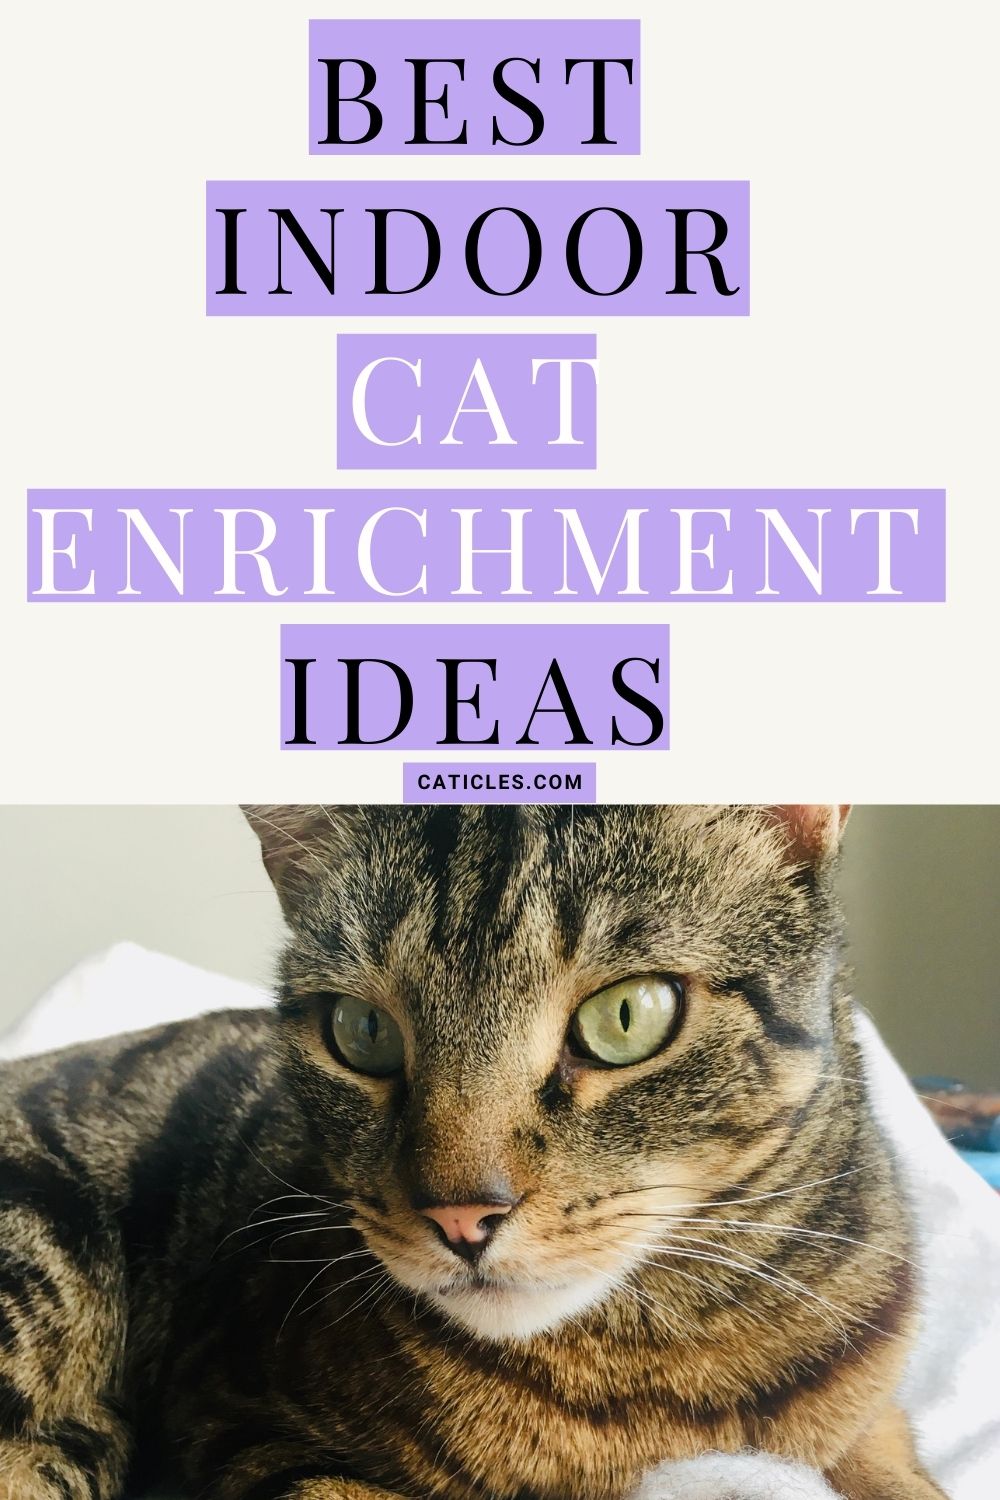 https://caticles.com/wp-content/uploads/2020/01/best-indoor-cat-enrichment-ideas-indoor-cat-happiness-checklist-caticles.jpg